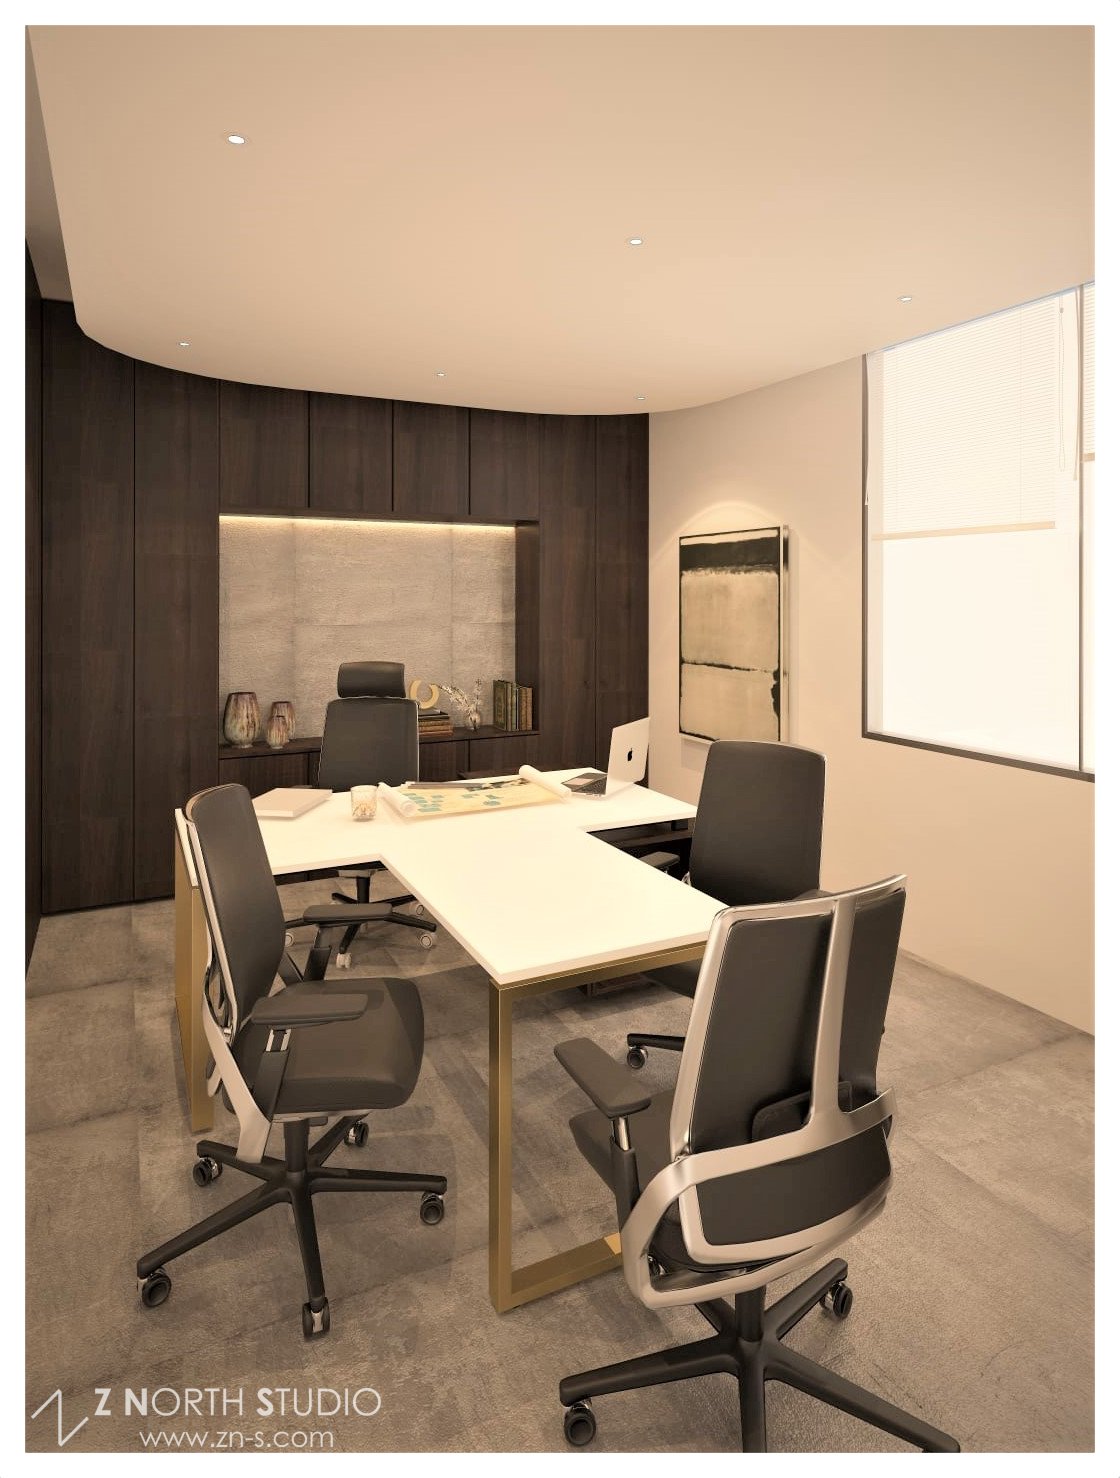 Interior Design - Z North Studio - Java Tax - Office - zn-s (2).jpg